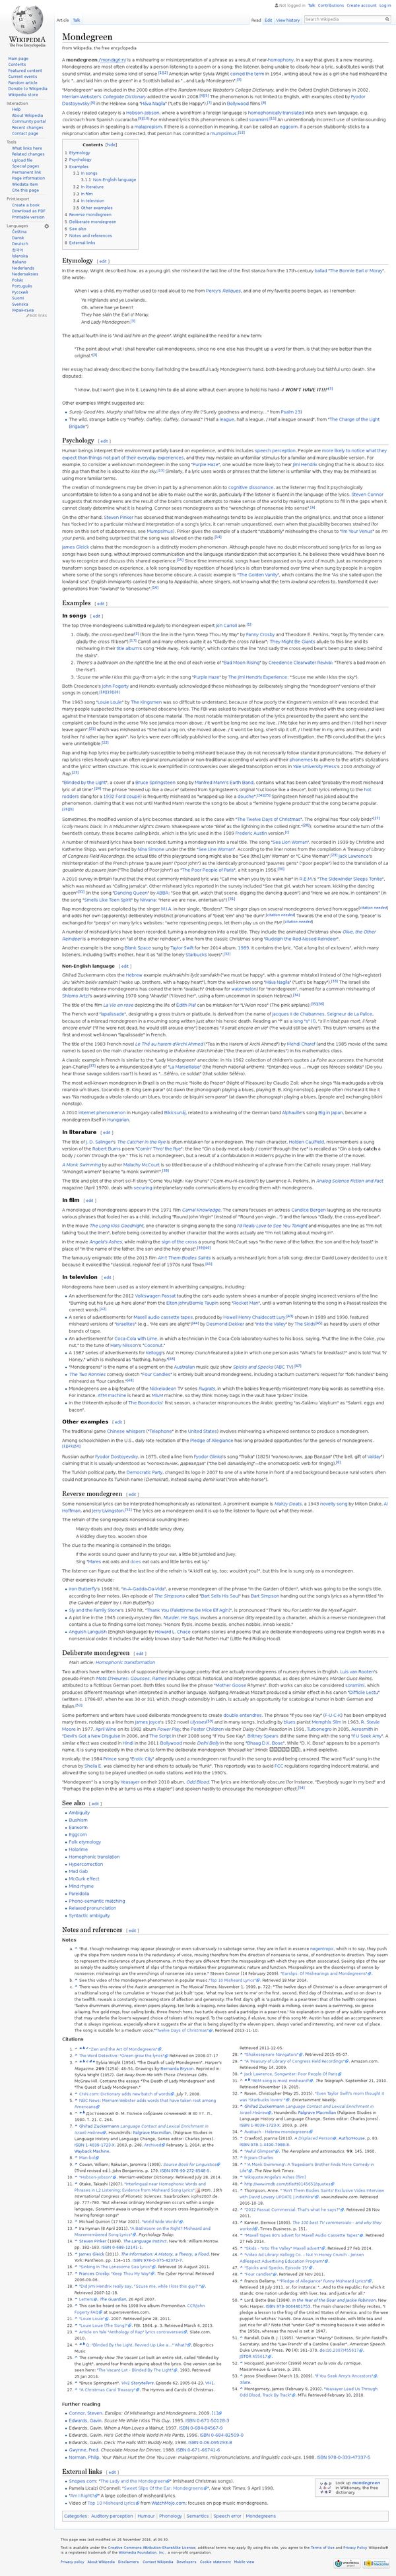 Mondegreen - Wikipedia, the free encyclopedia